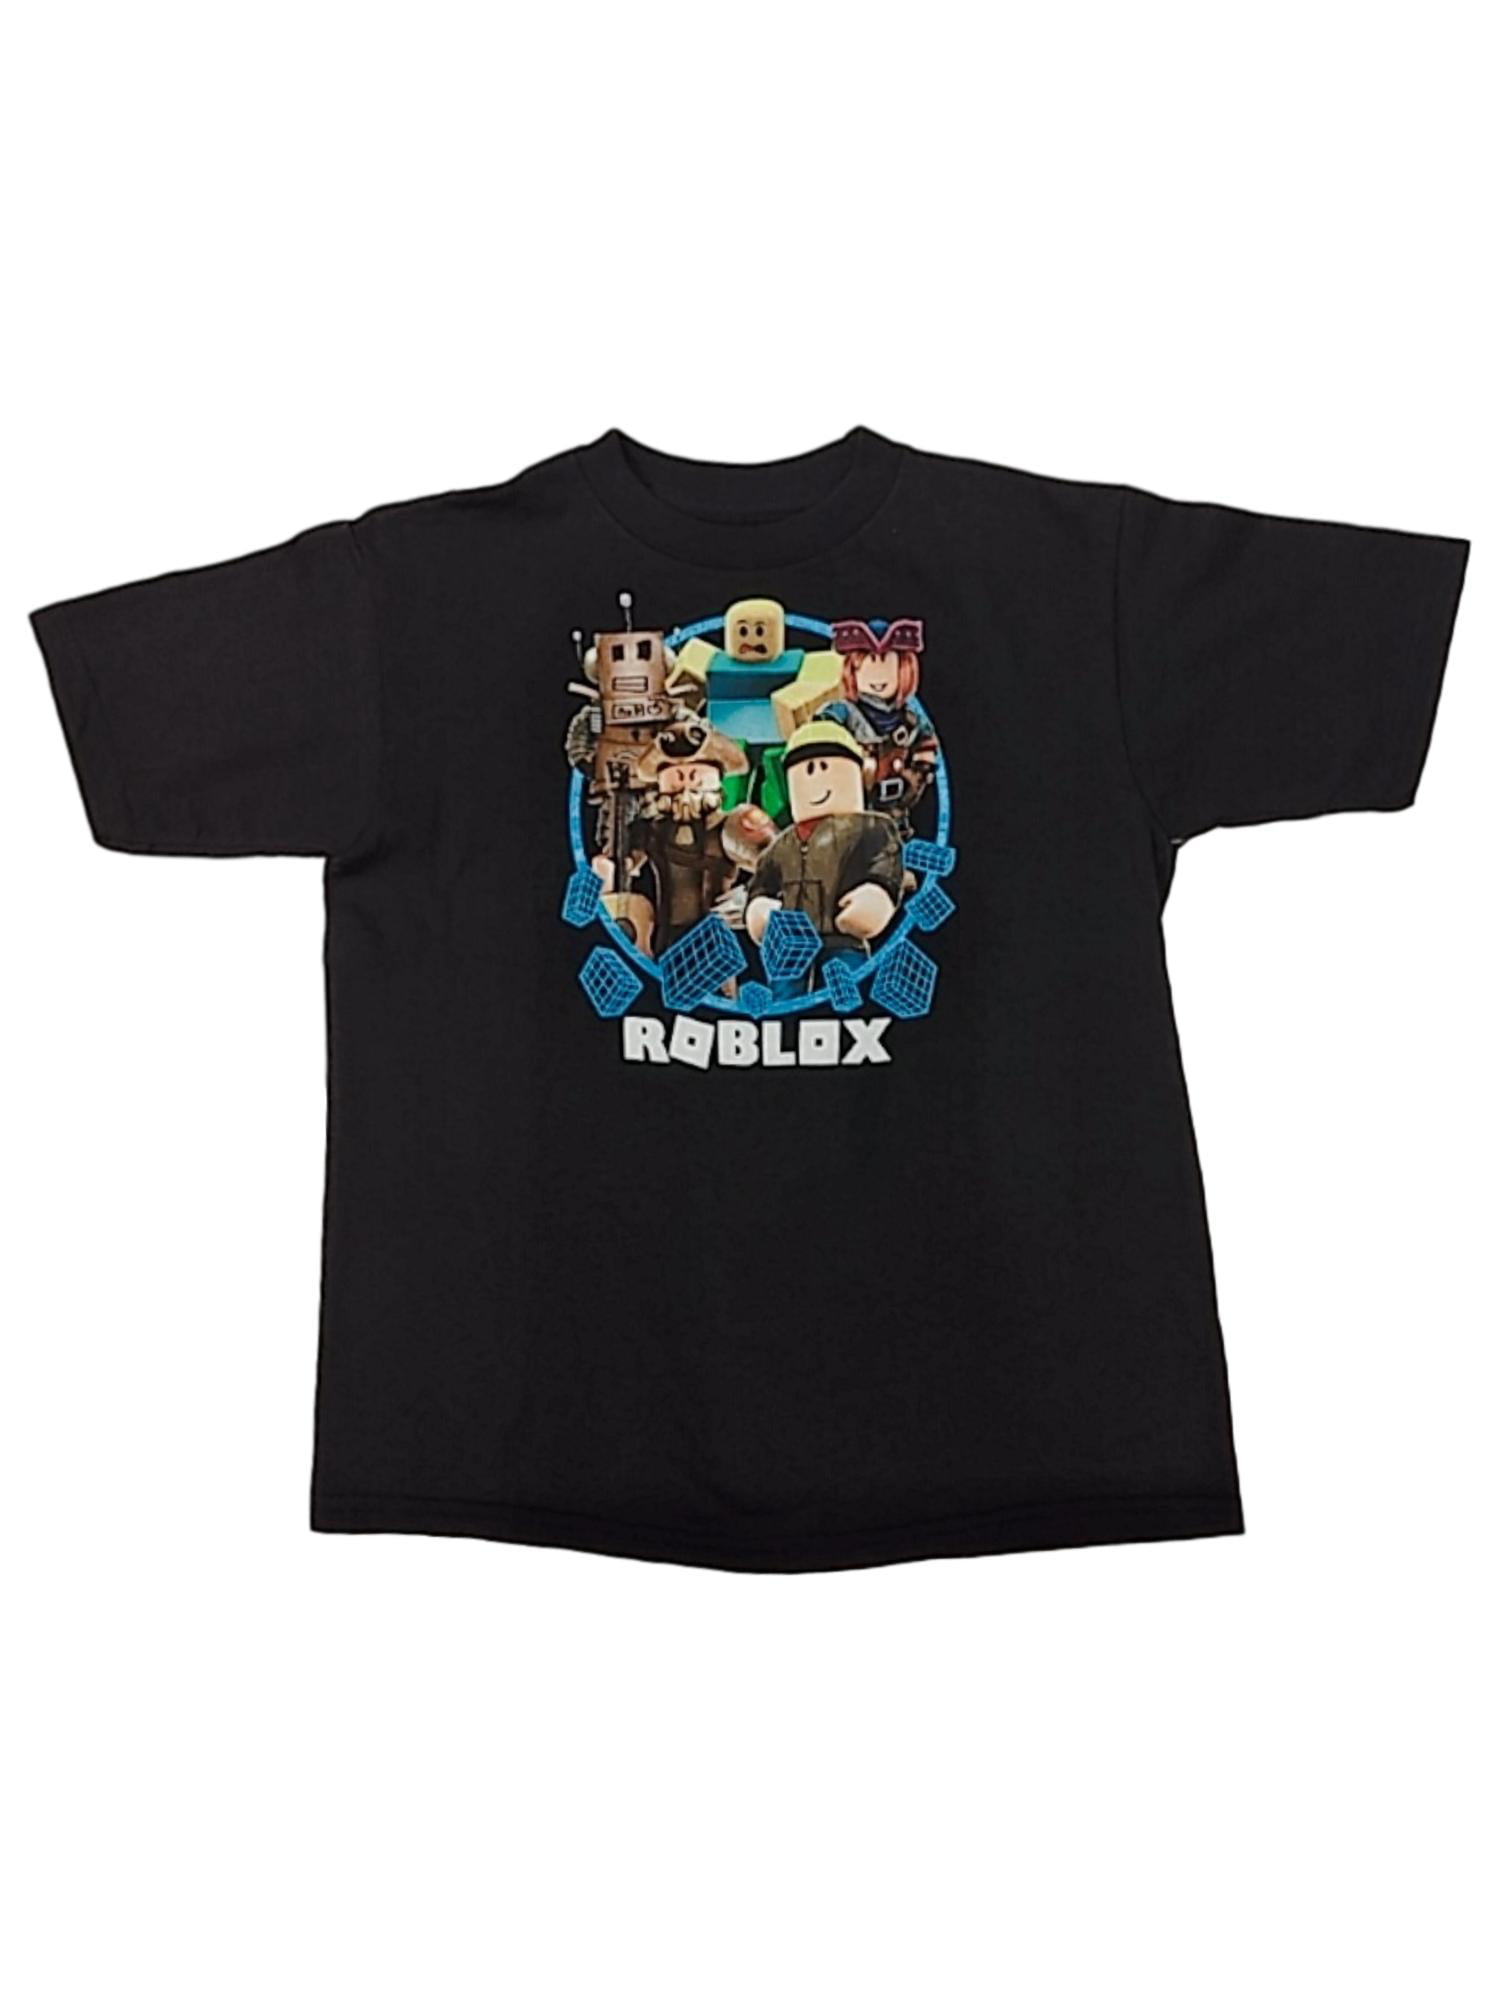 Boys Black Roblox Multi Character T Shirt Graphic Tee Shirt Large 6 7 Walmart Com Walmart Com - roblox cool boy characters